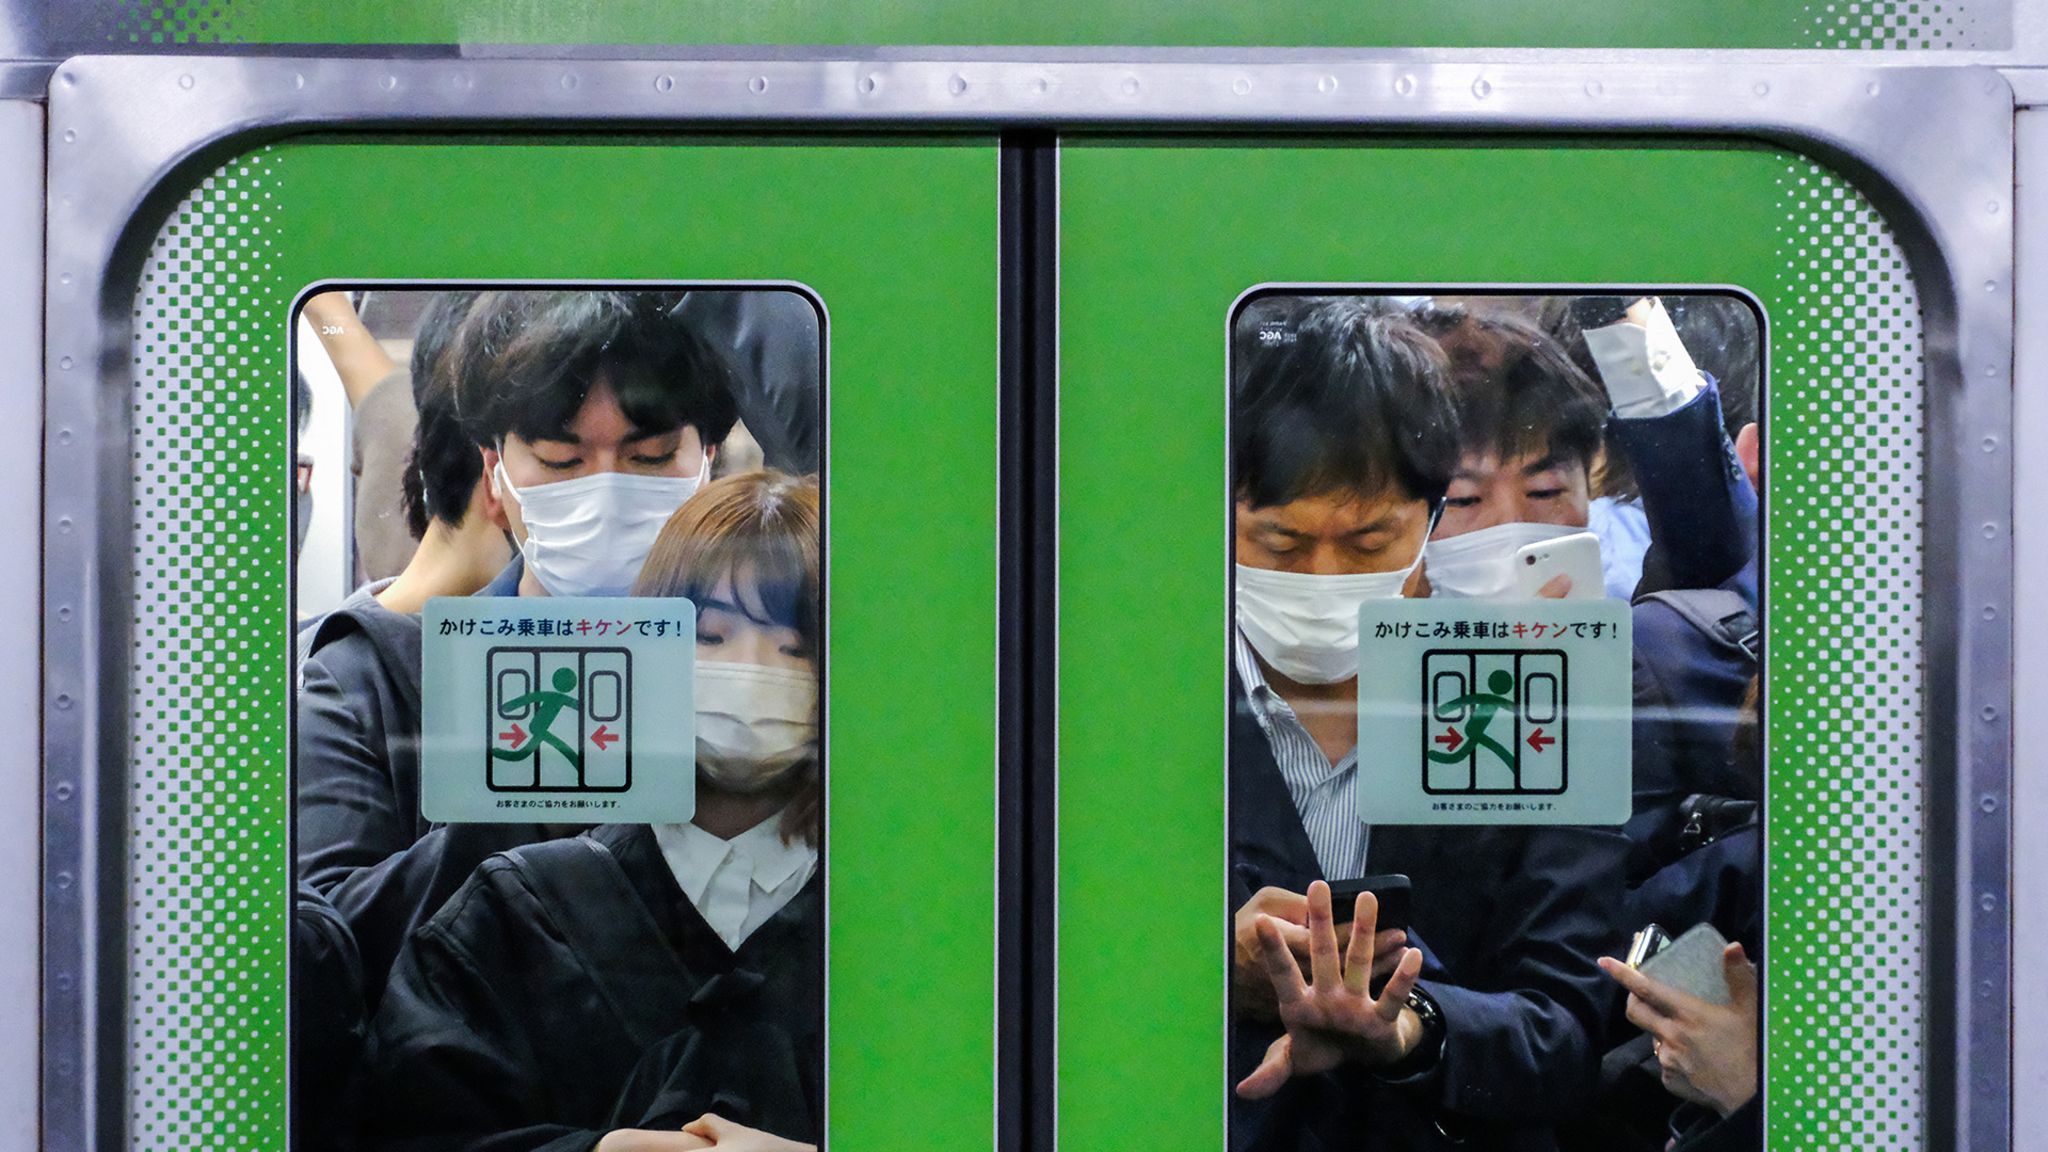 A crowded Tokyo train